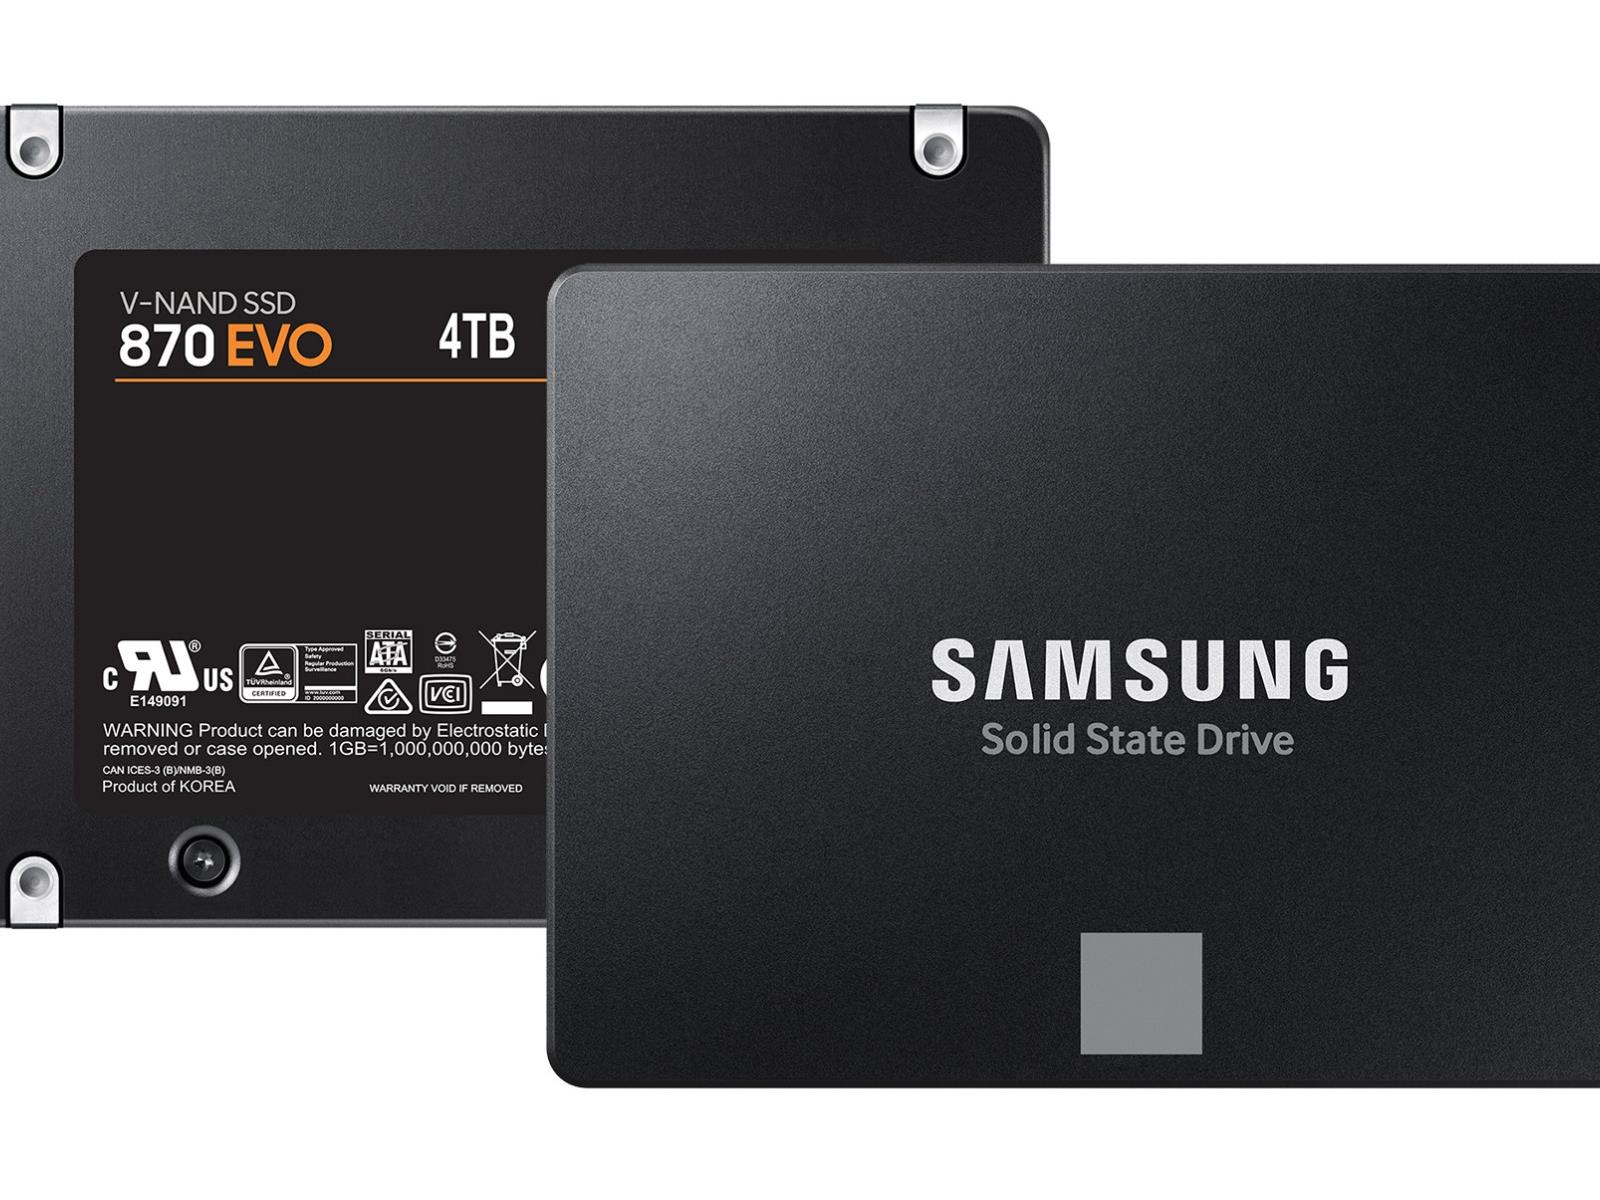 Samsung SSD EVO Review: Fastest SSDs | HotHardware